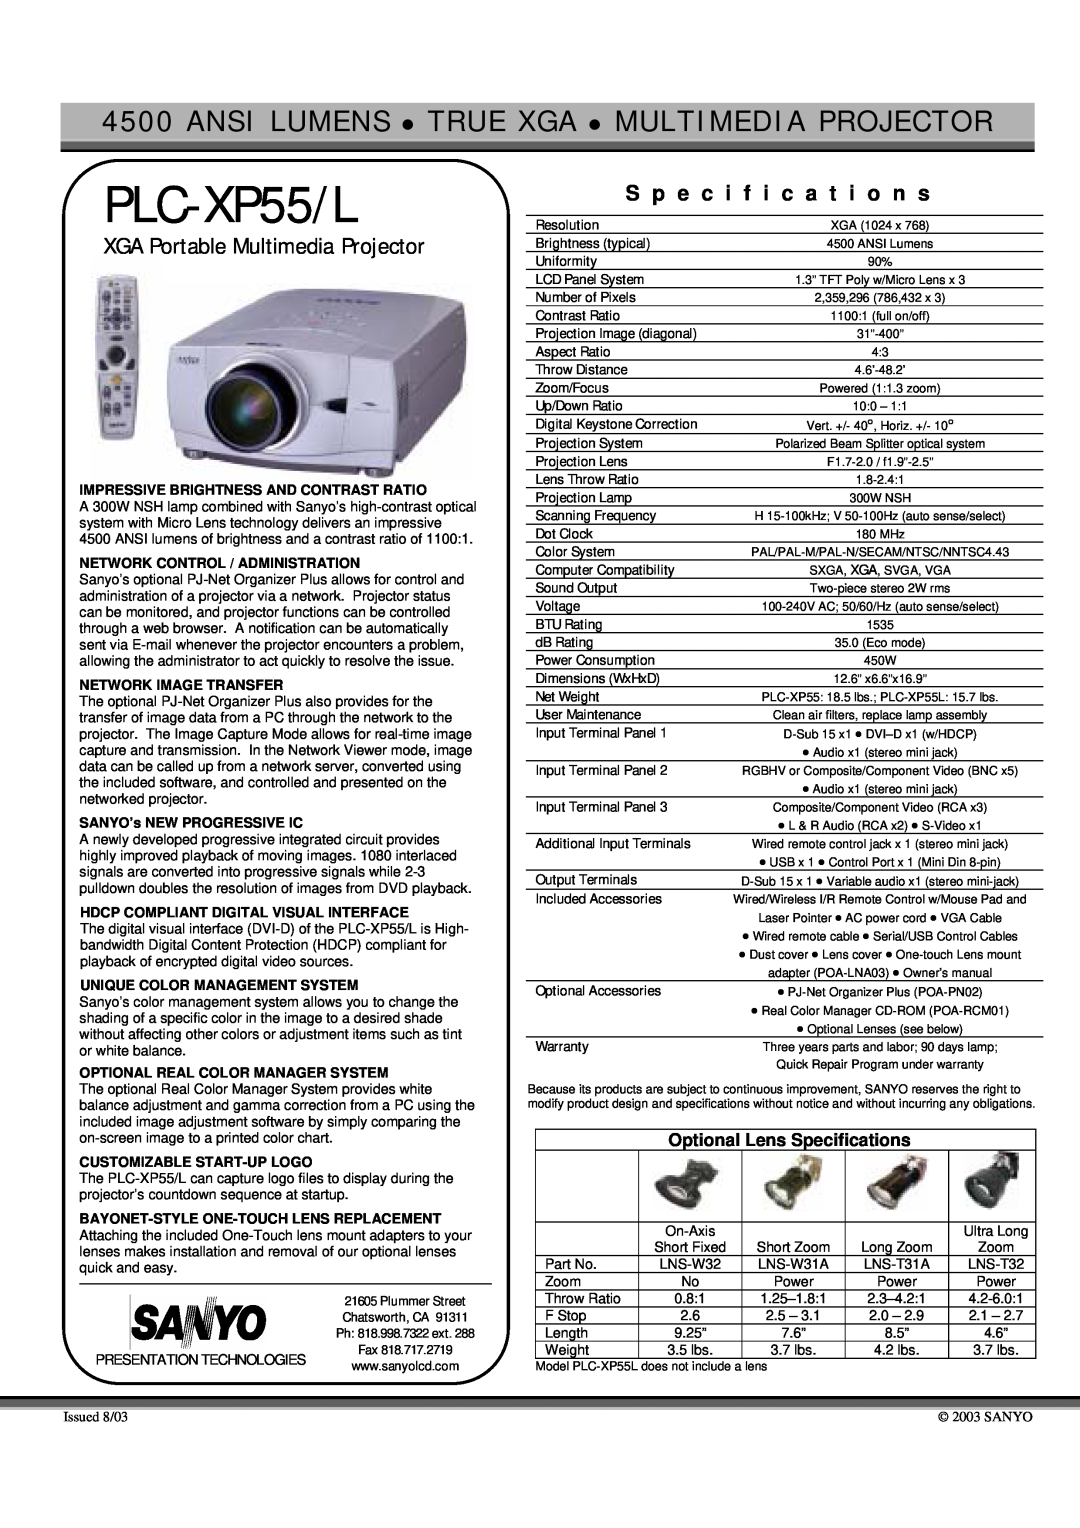 Sanyo PLC-XP55/L specifications XGA Portable Multimedia Projector, S p e c i f i c a t i o n s, Presentation Technologies 